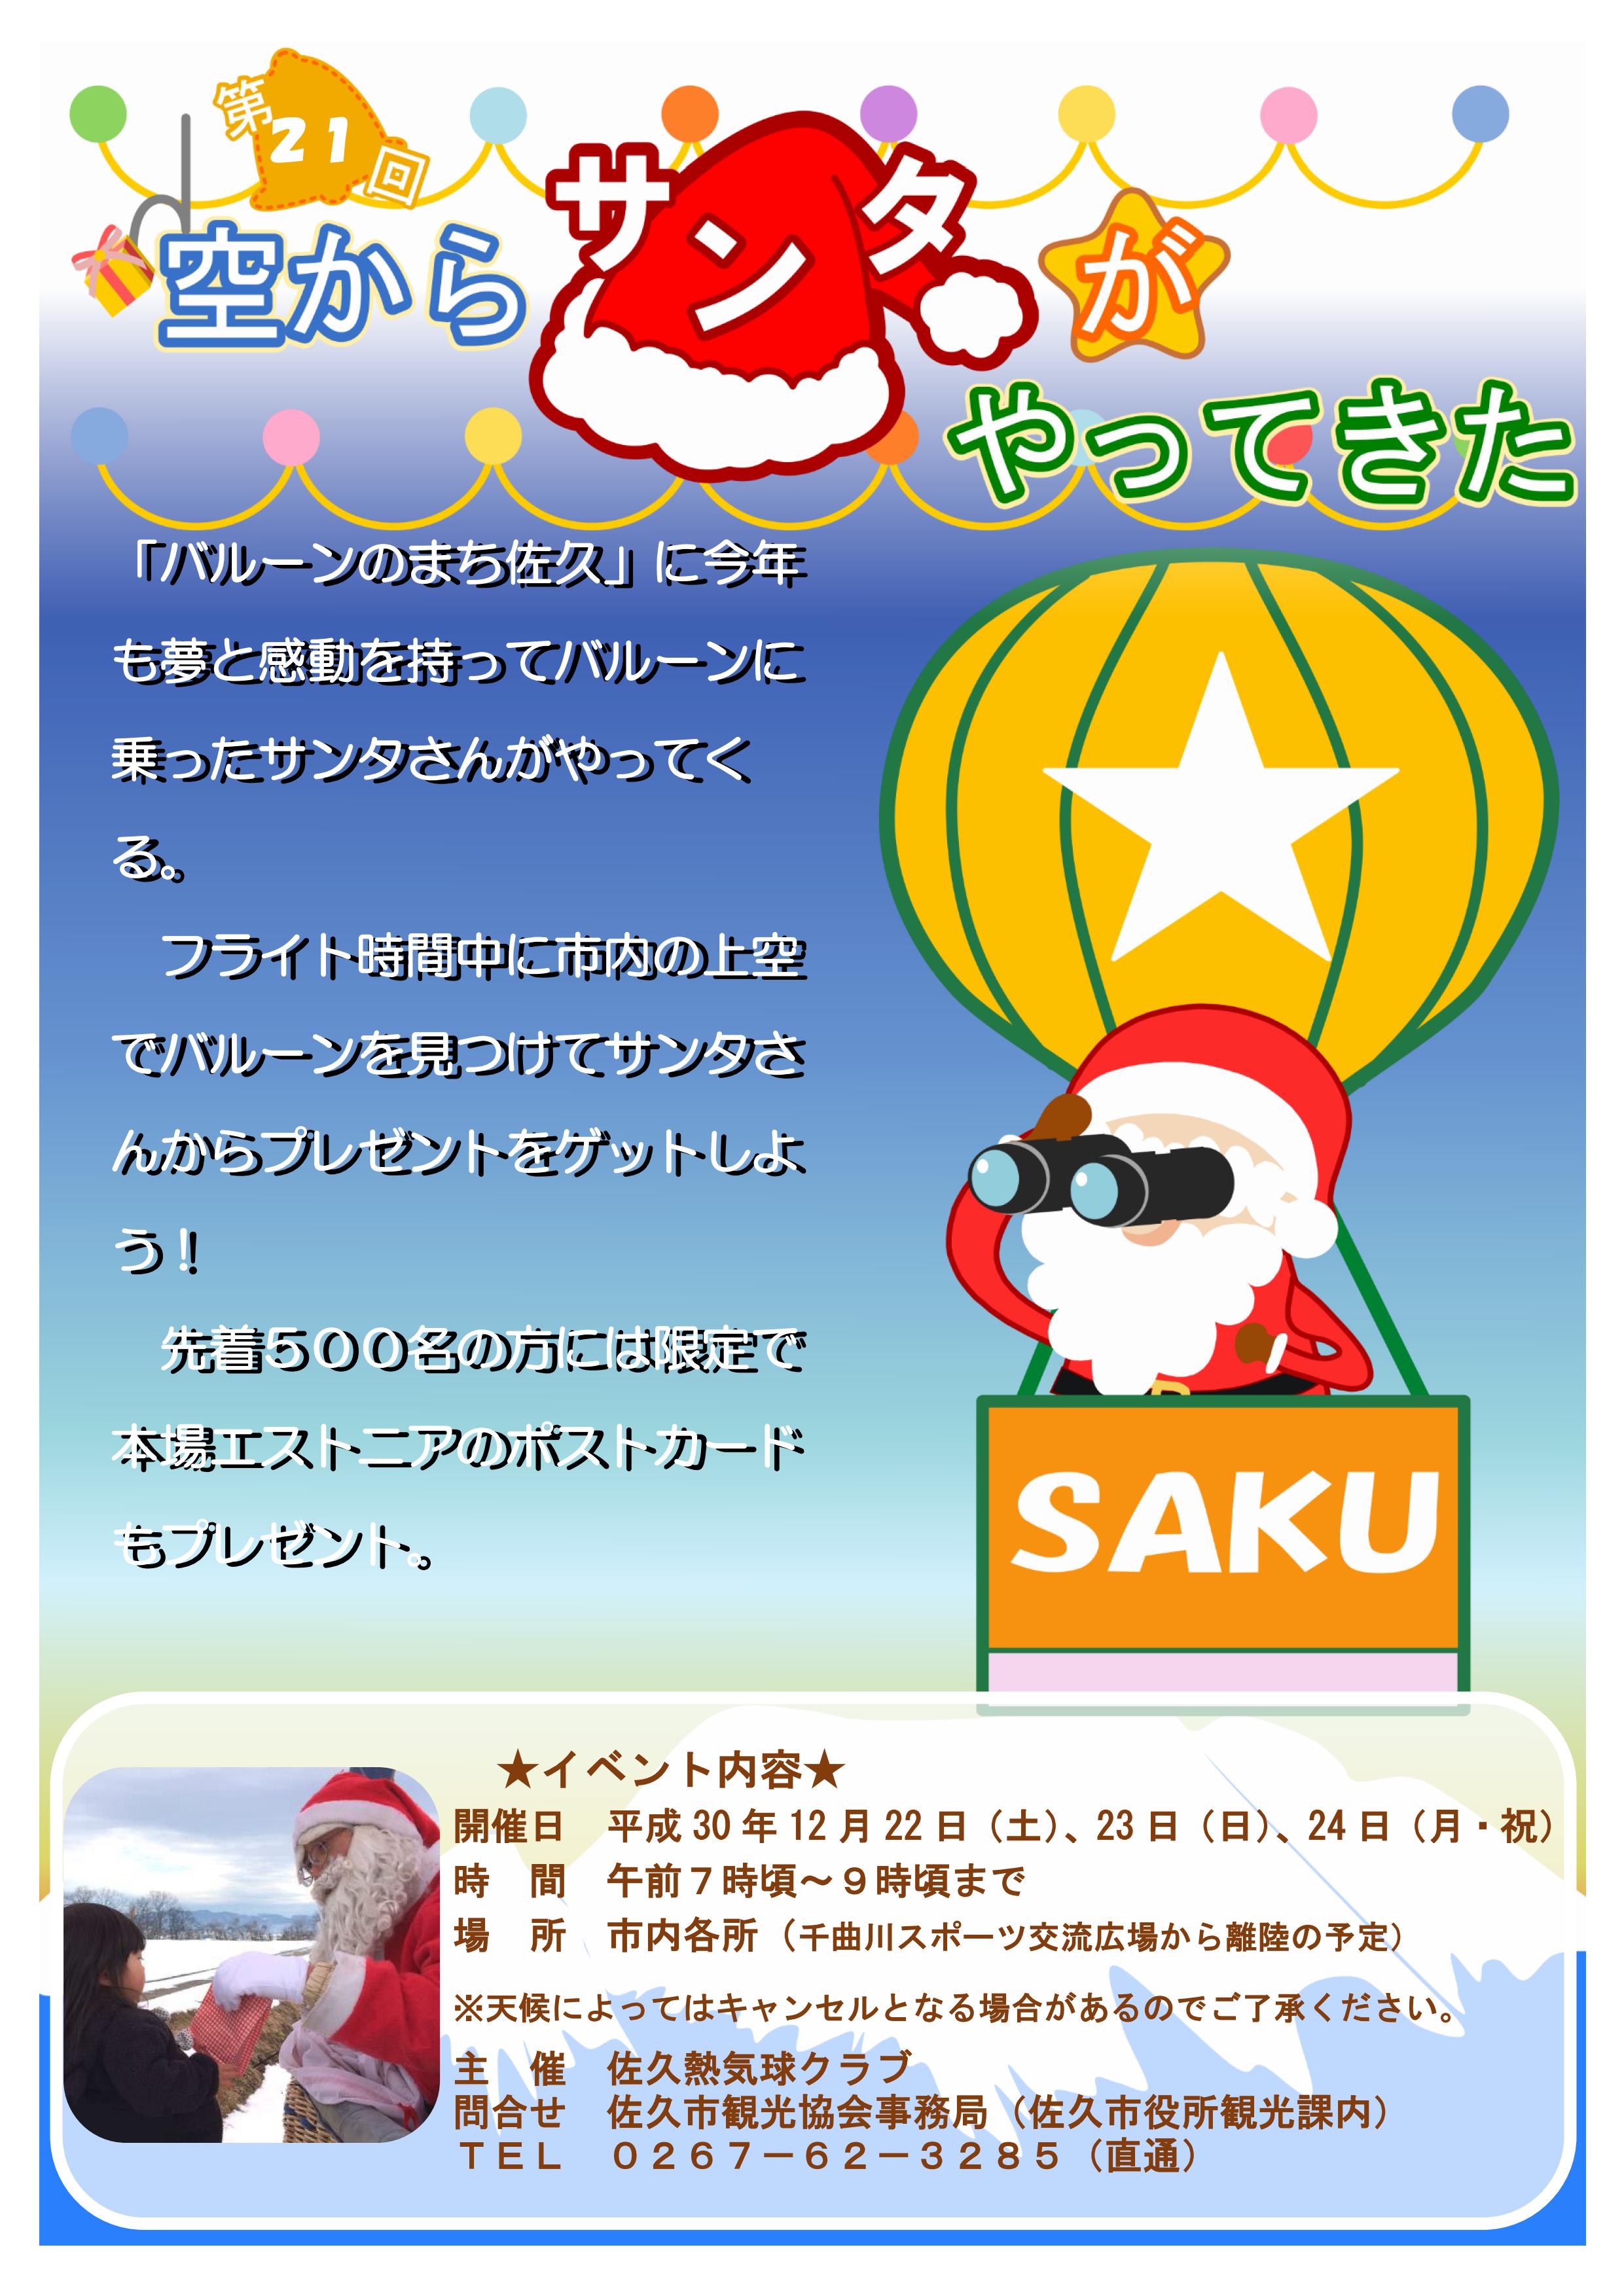 http://www.sakukankou.jp/topics/sannta.jpg